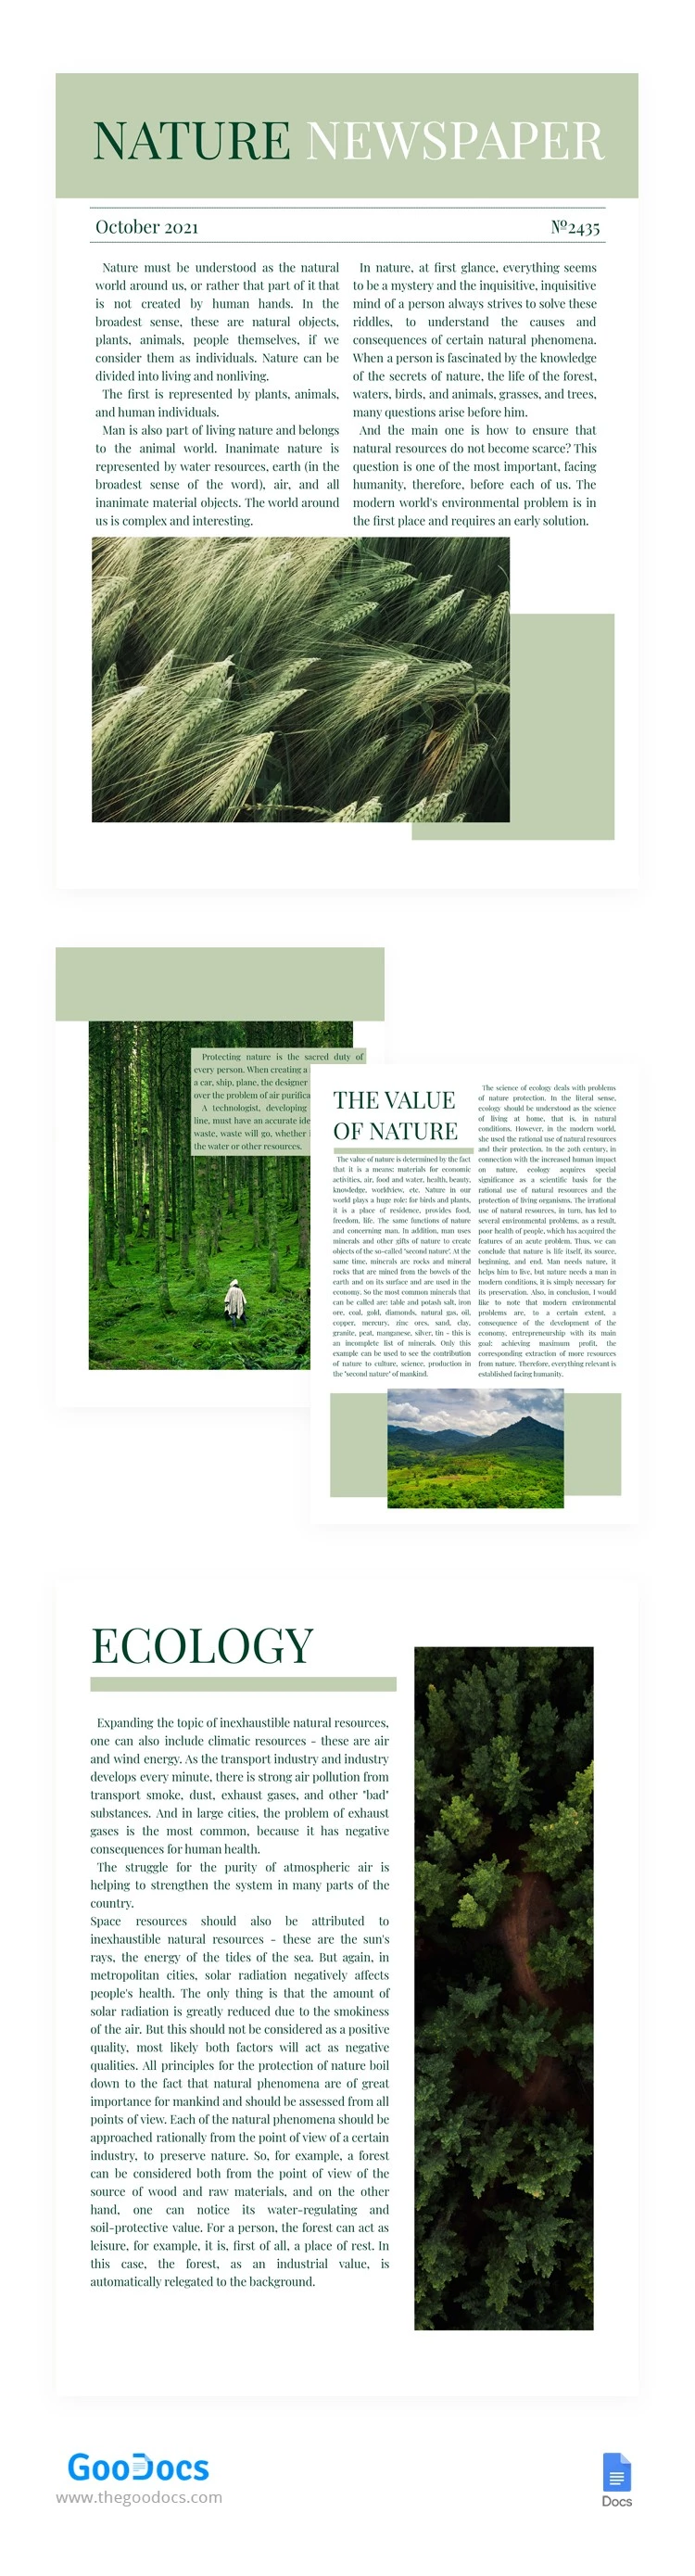 Green Nature Newspaper - free Google Docs Template - 10062140